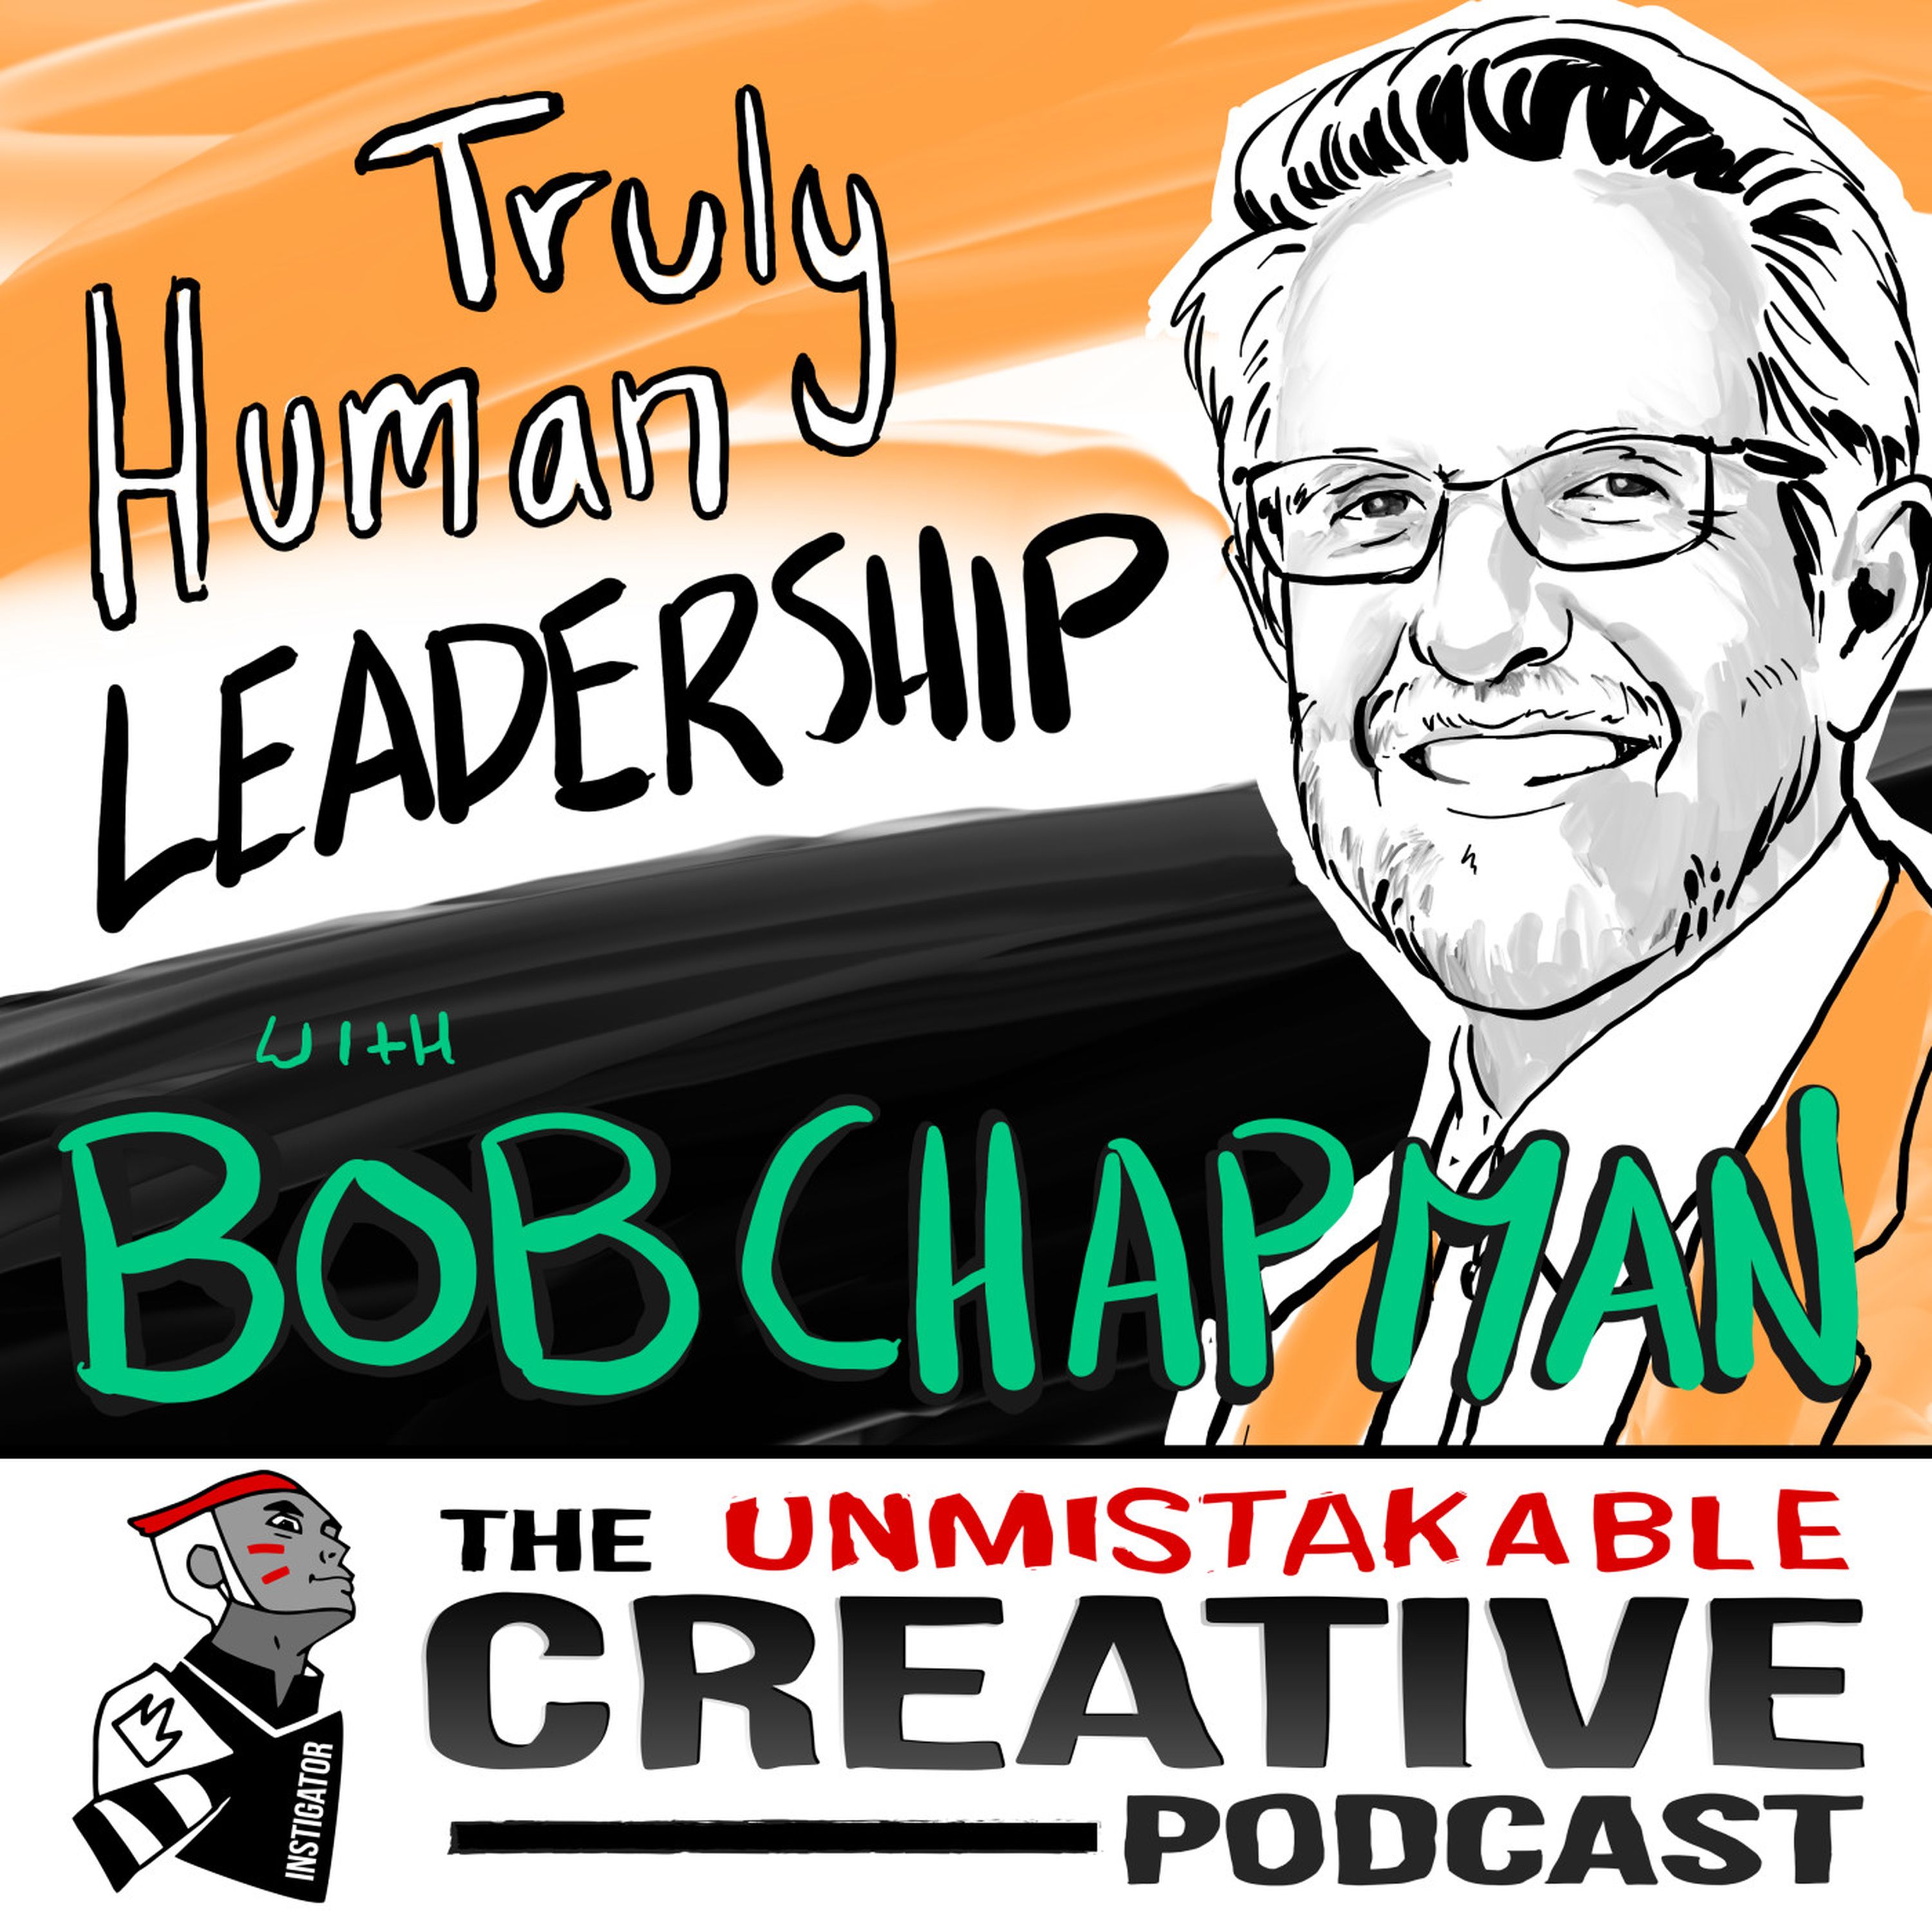 Truly Human Leadership with Bob Chapman Image